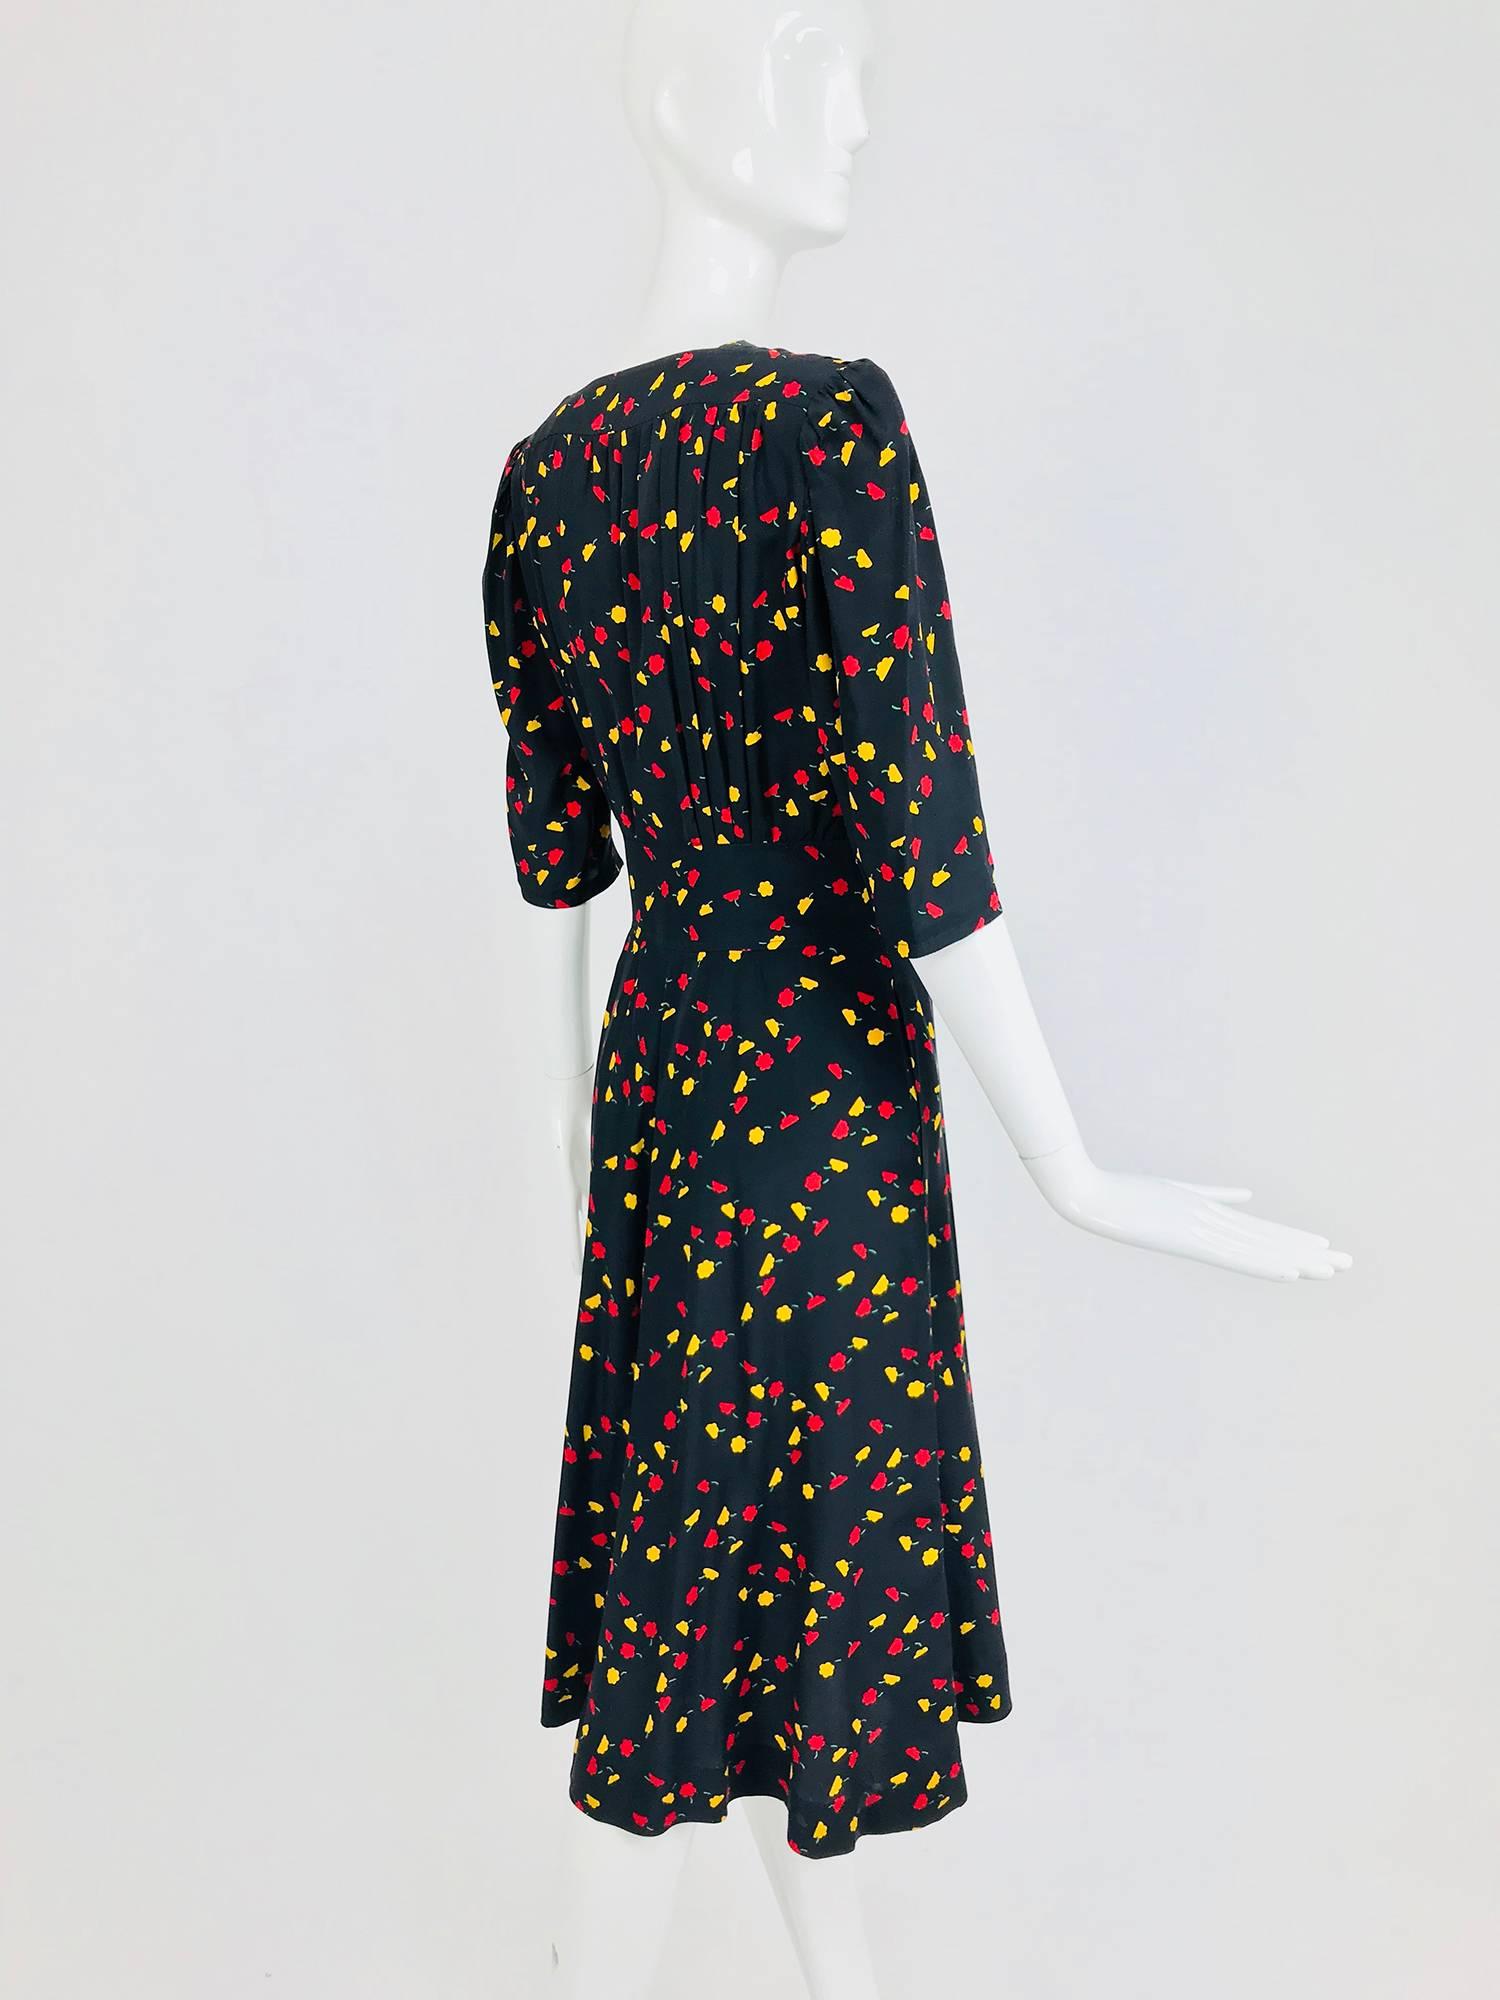 Ungaro floral print silk day dress, 1970s 2